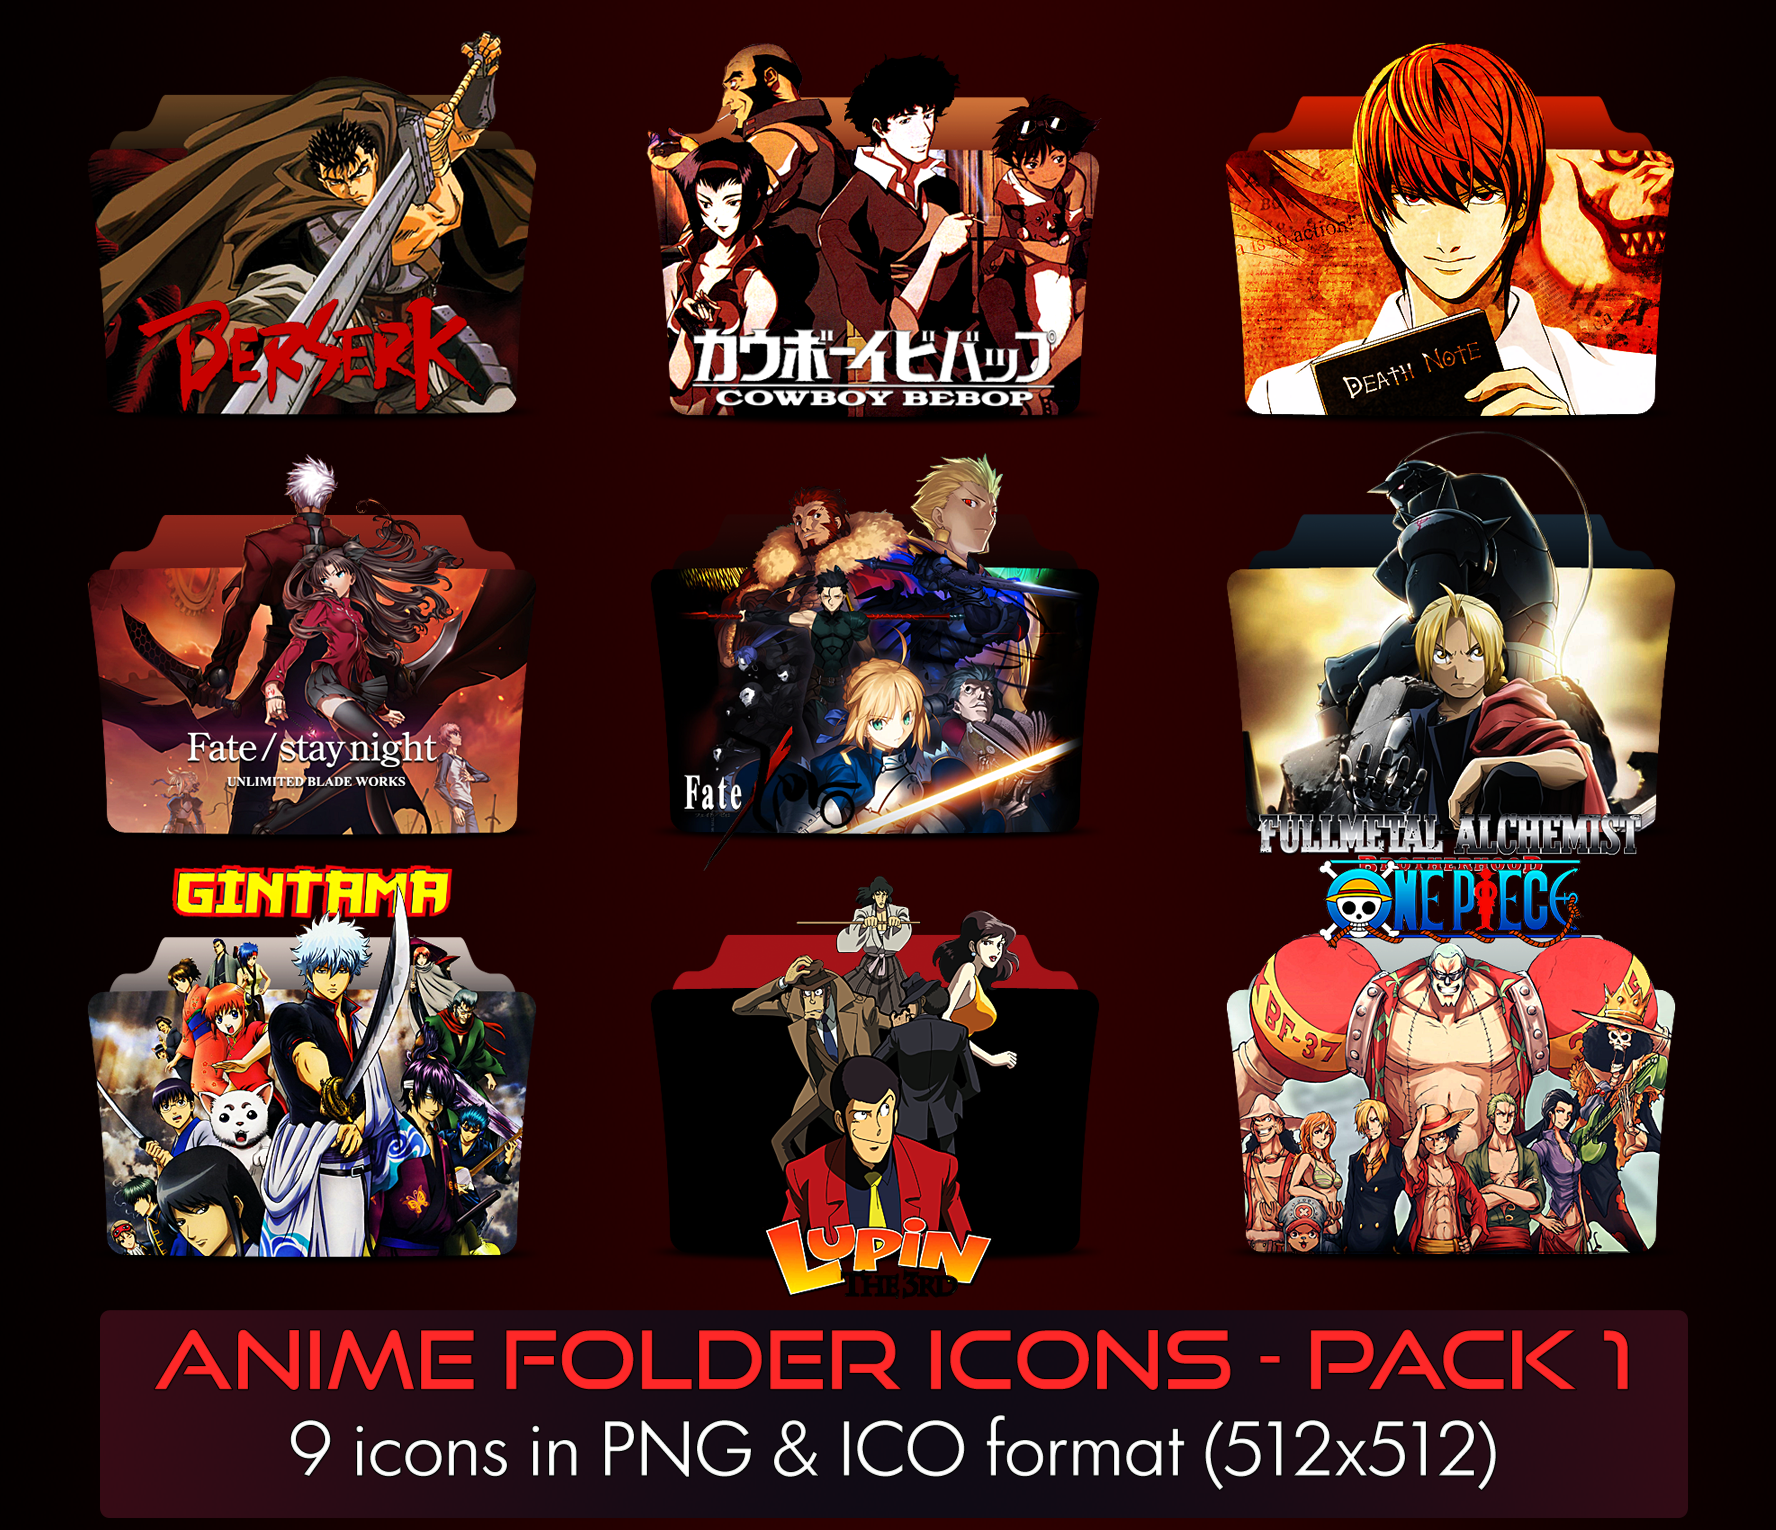 Anime - Icon Pack 1 by apollojr on DeviantArt. 